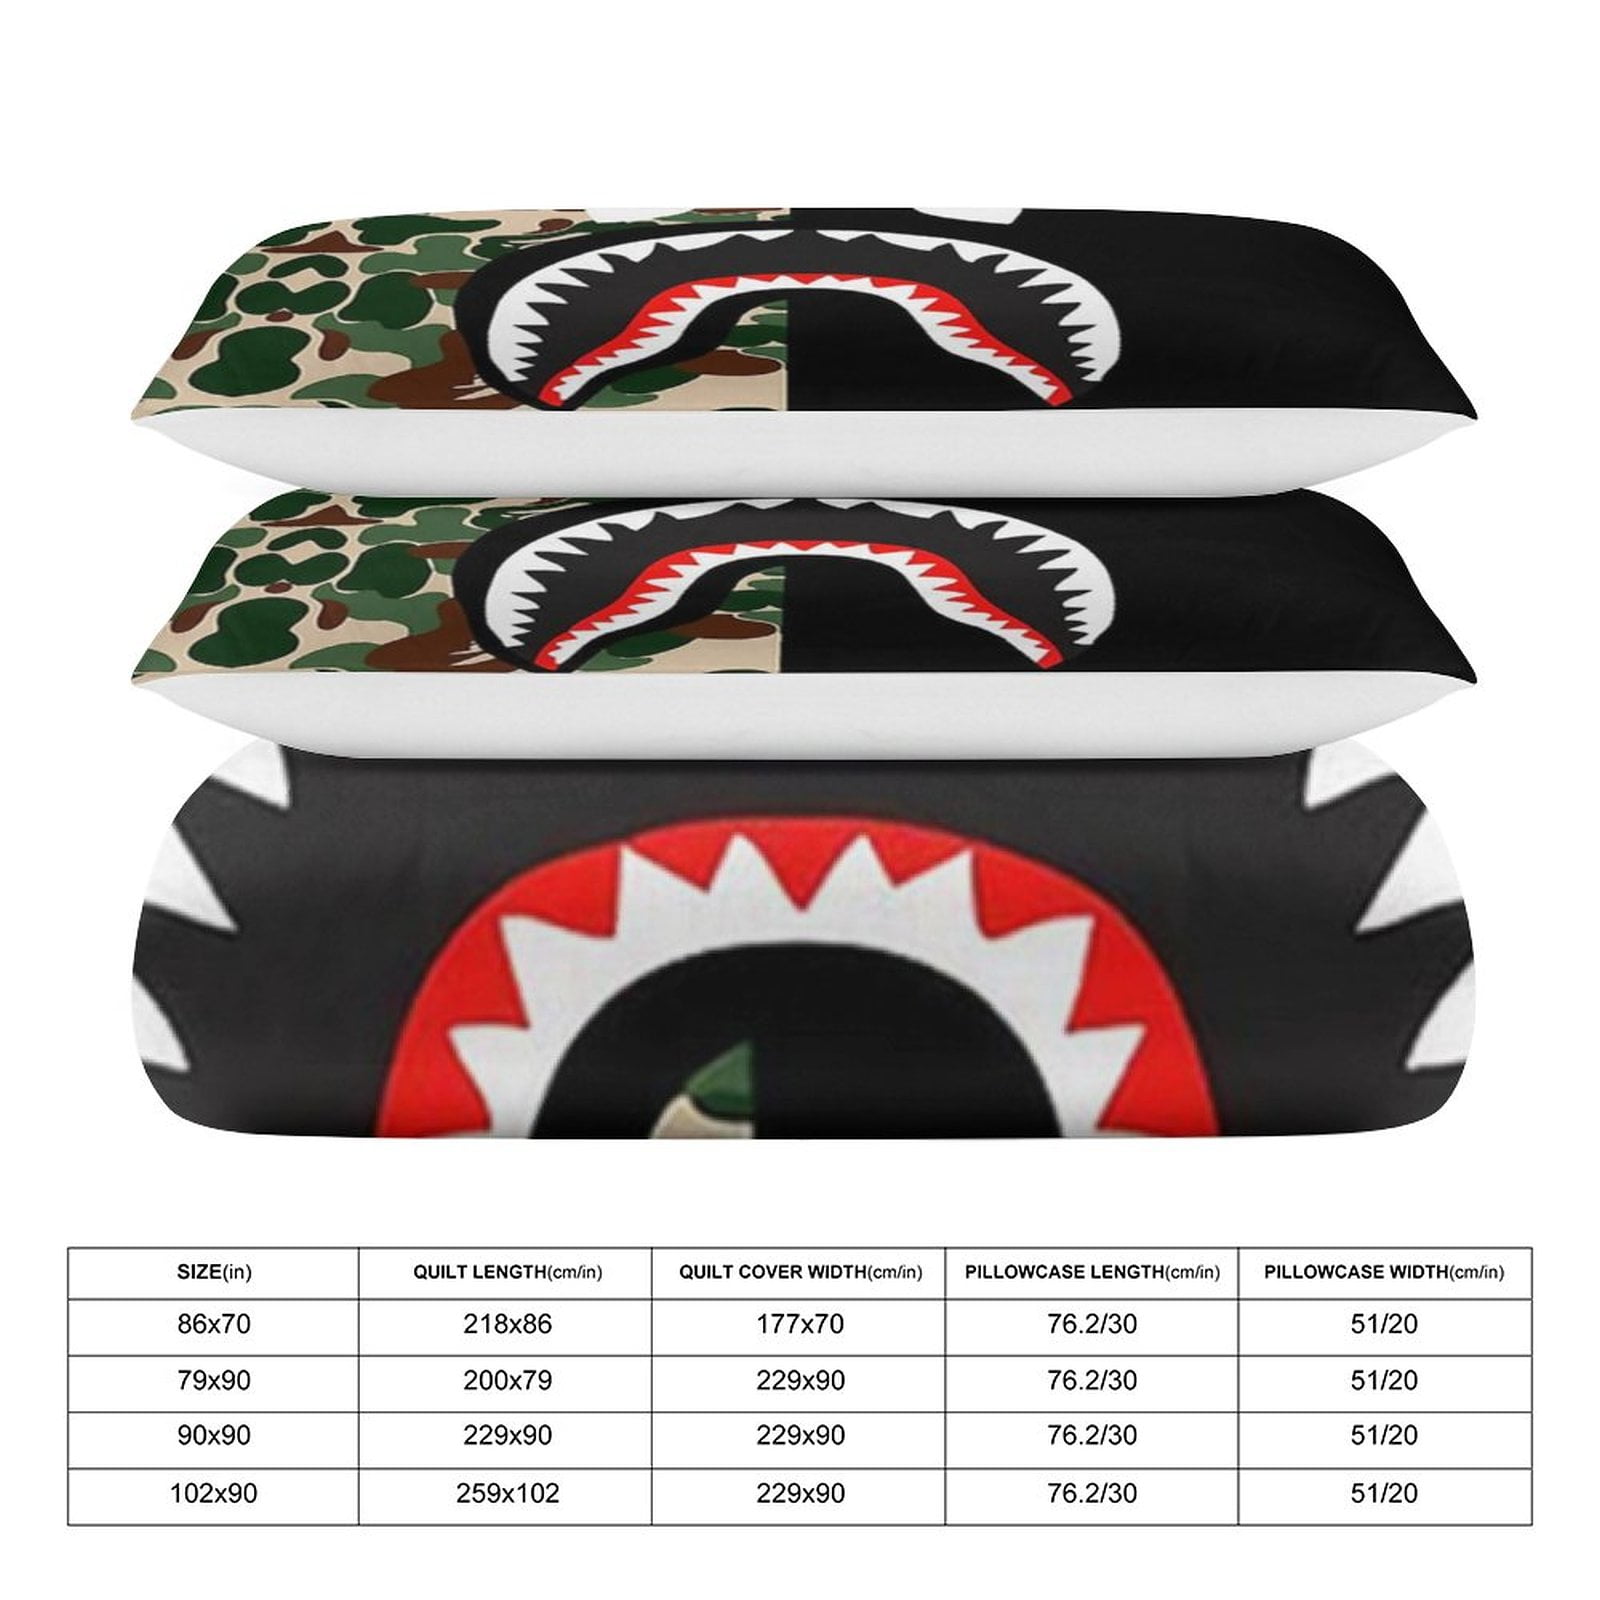 Black Bape Camo Shark WGM Custom Pillow Decorative Cushion Cover